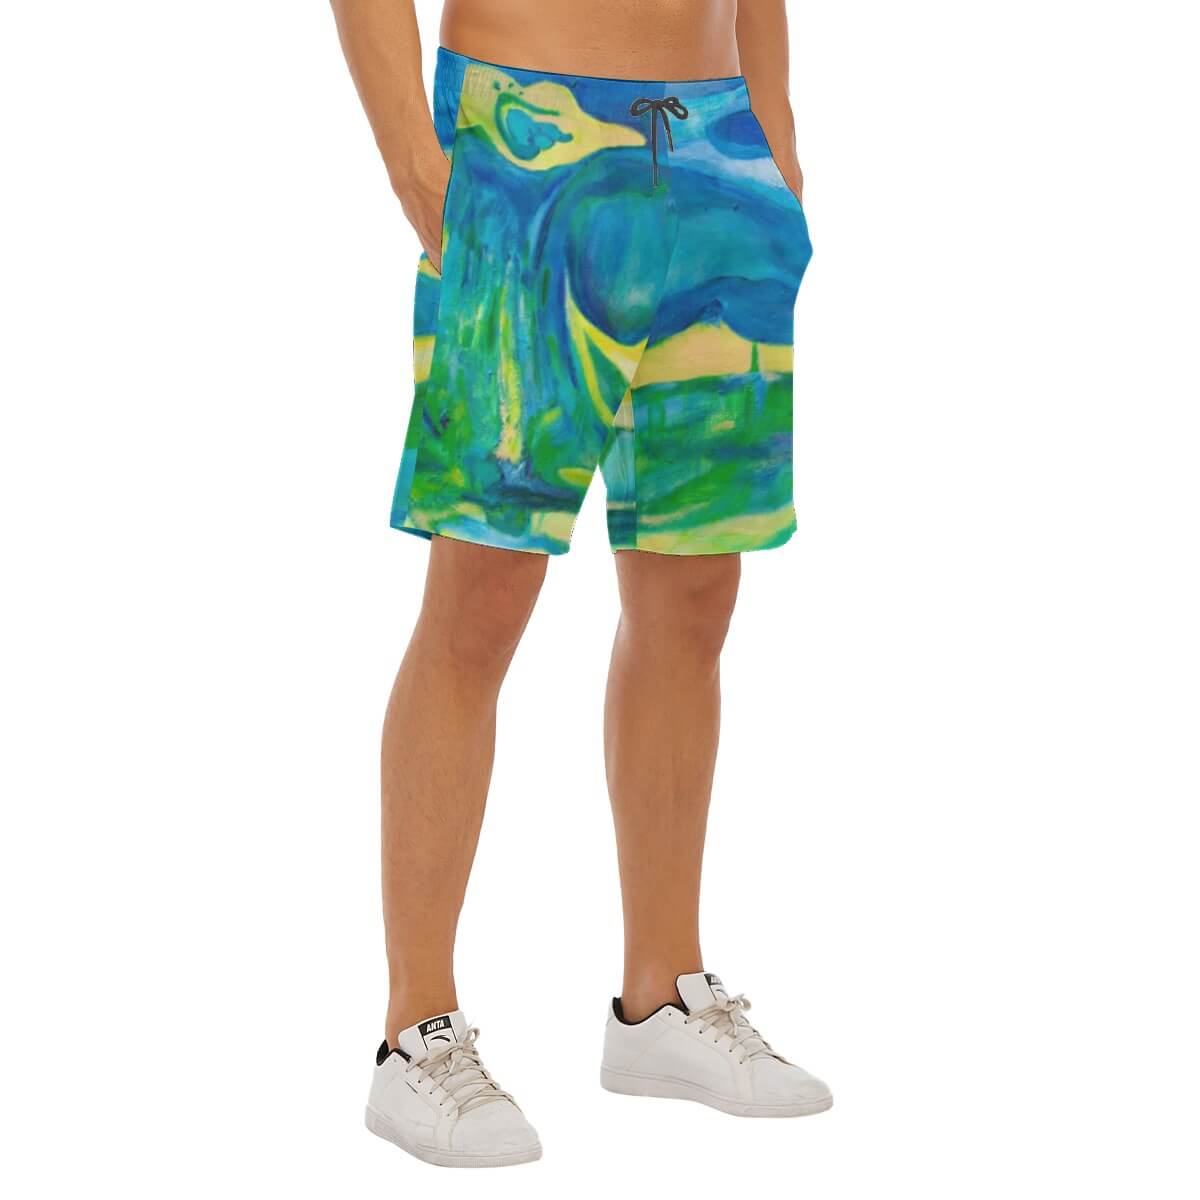 Men’s Beach Shorts Under The Sea Collection